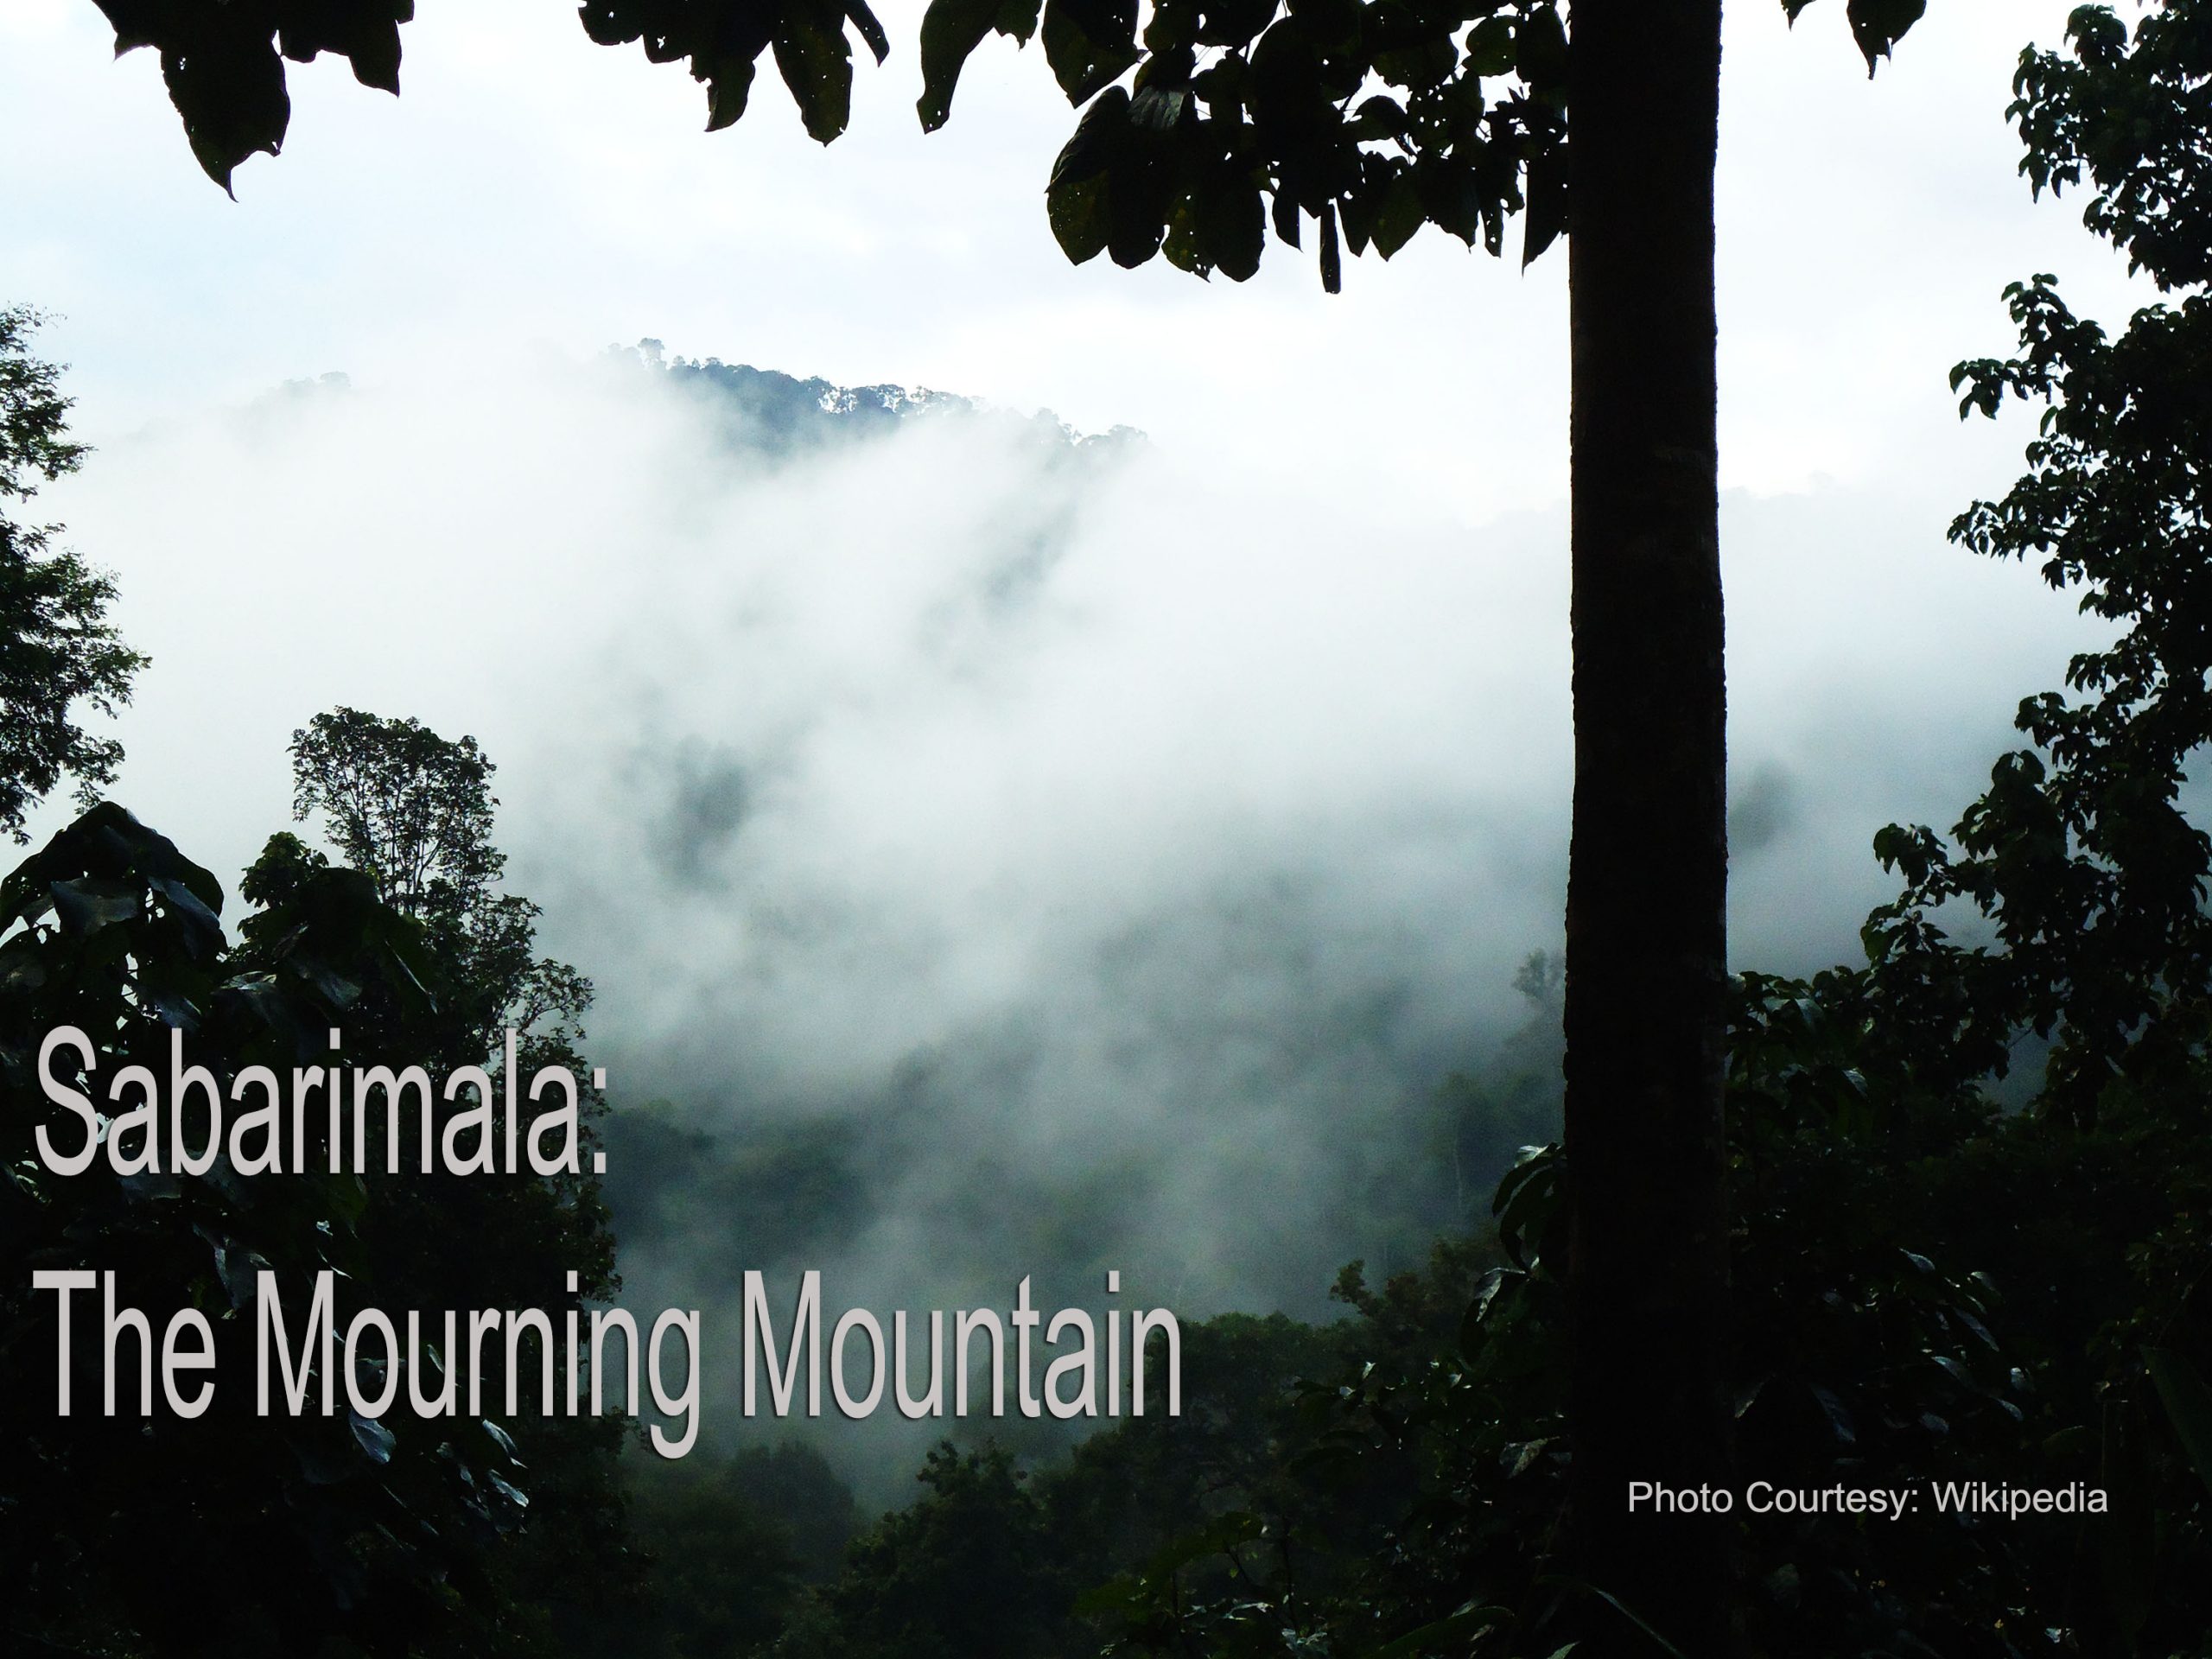 Sabarimala: The Mourning Mountain